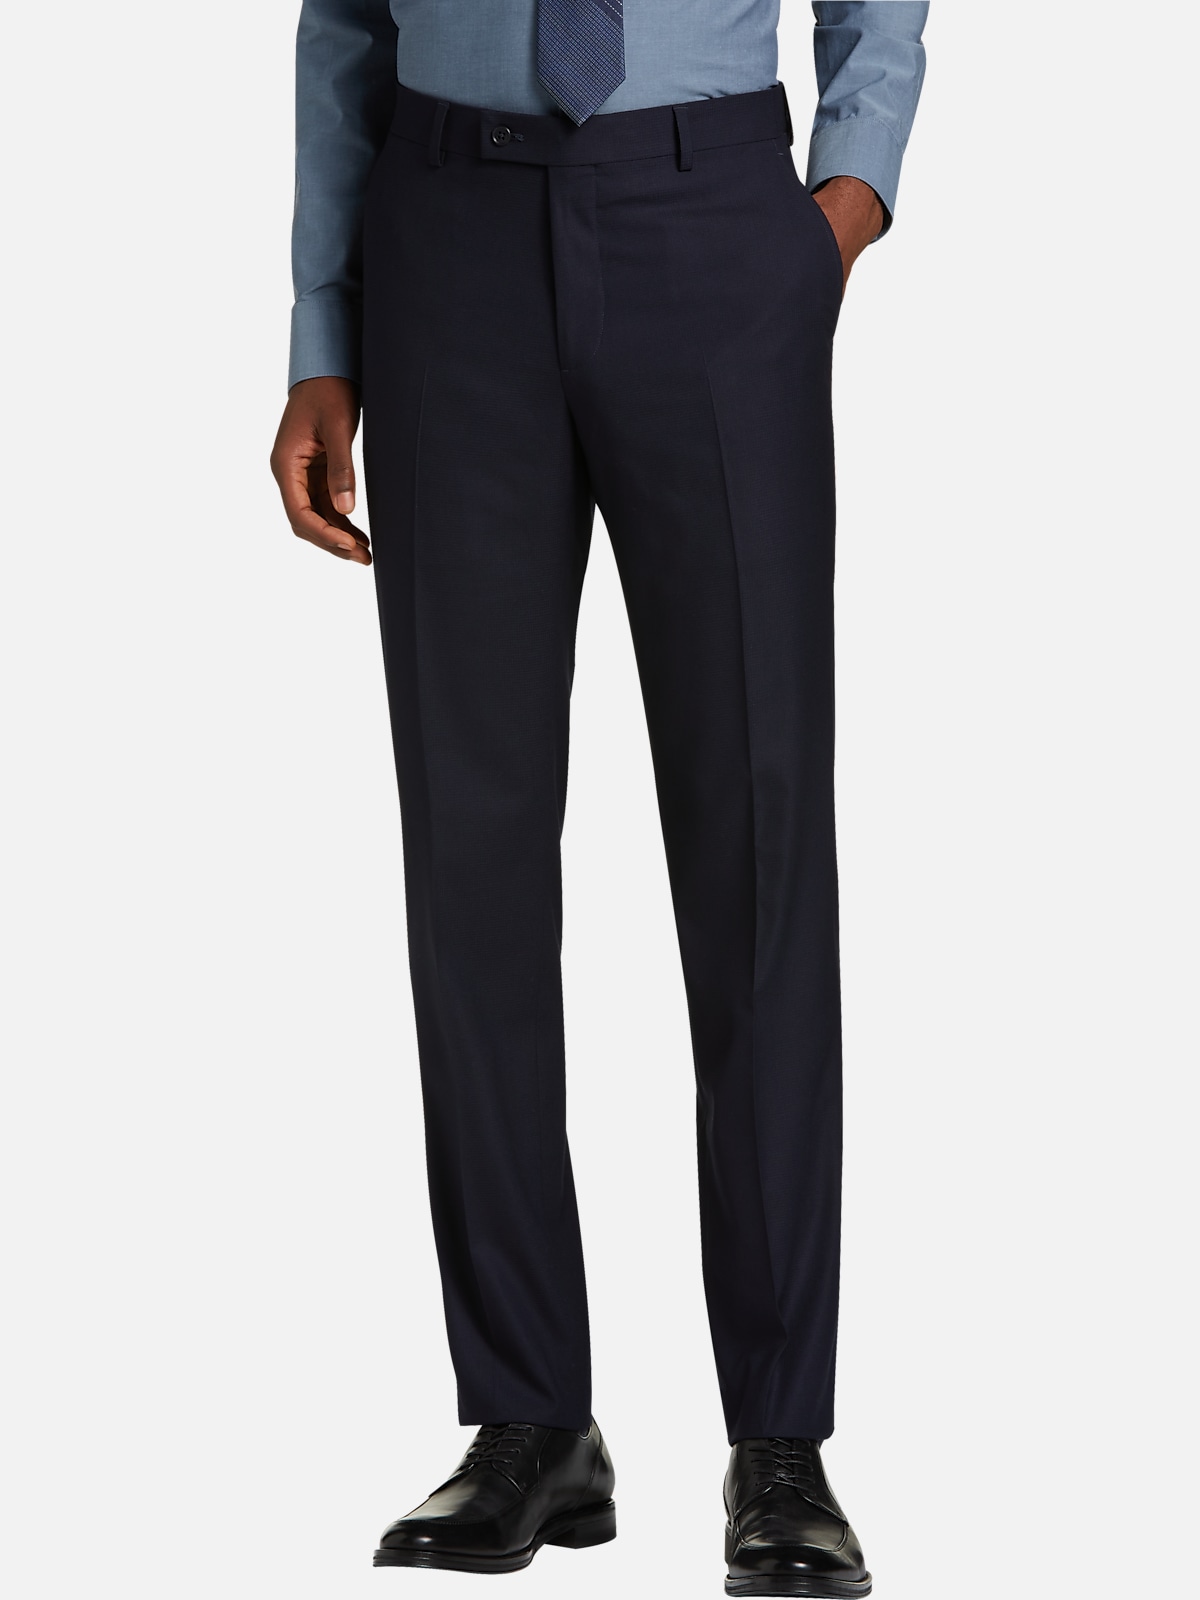 Wilke-Rodriguez Slim Fit Suit Separates Pants | All Clearance $39.99 ...